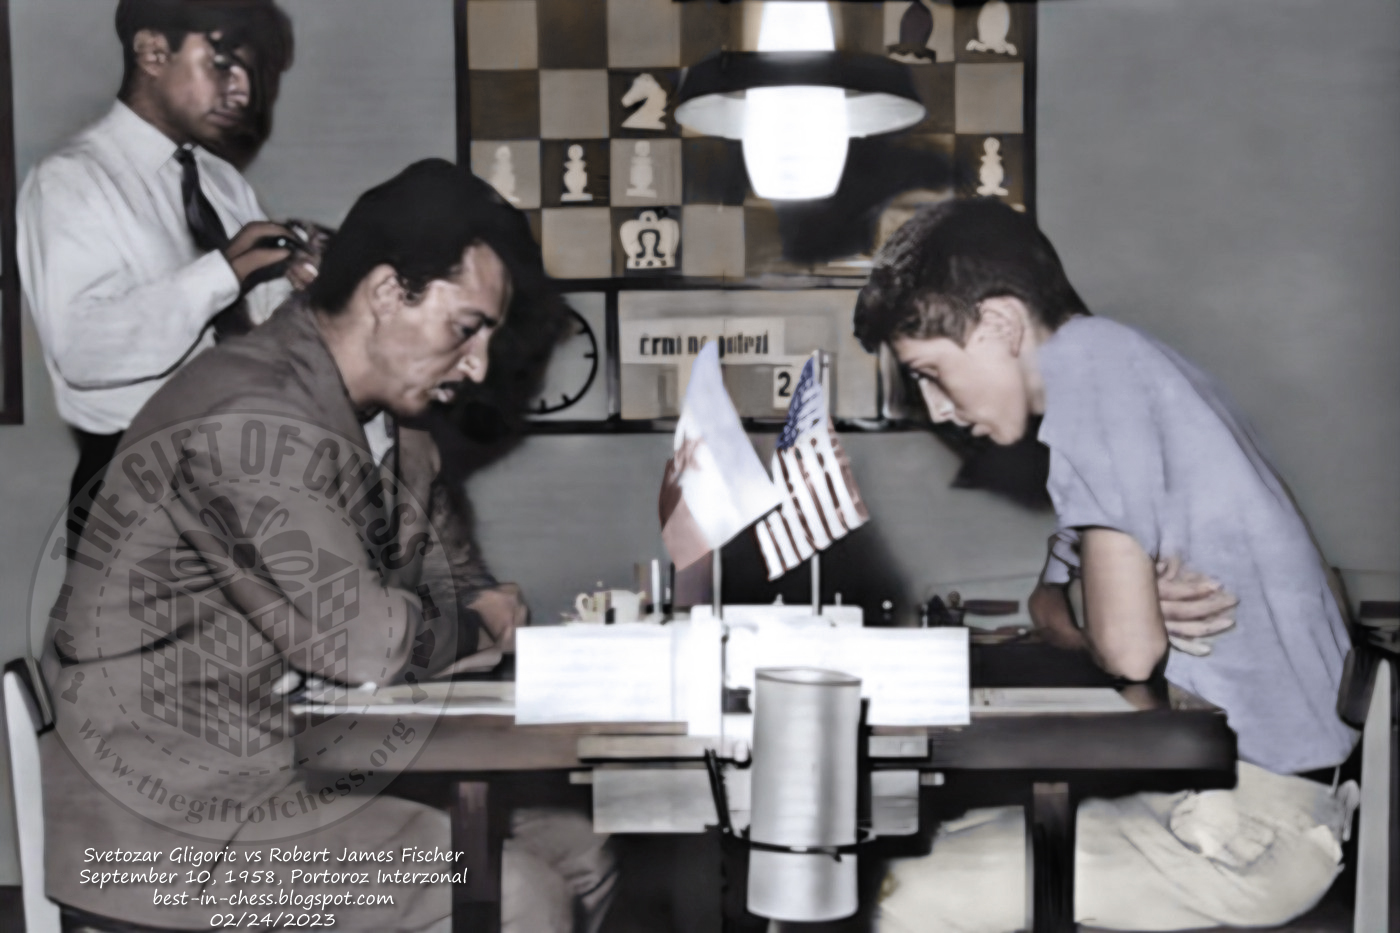 Mozart dos tabuleiros e aspirante a Bobby Fischer lutam pelo trono